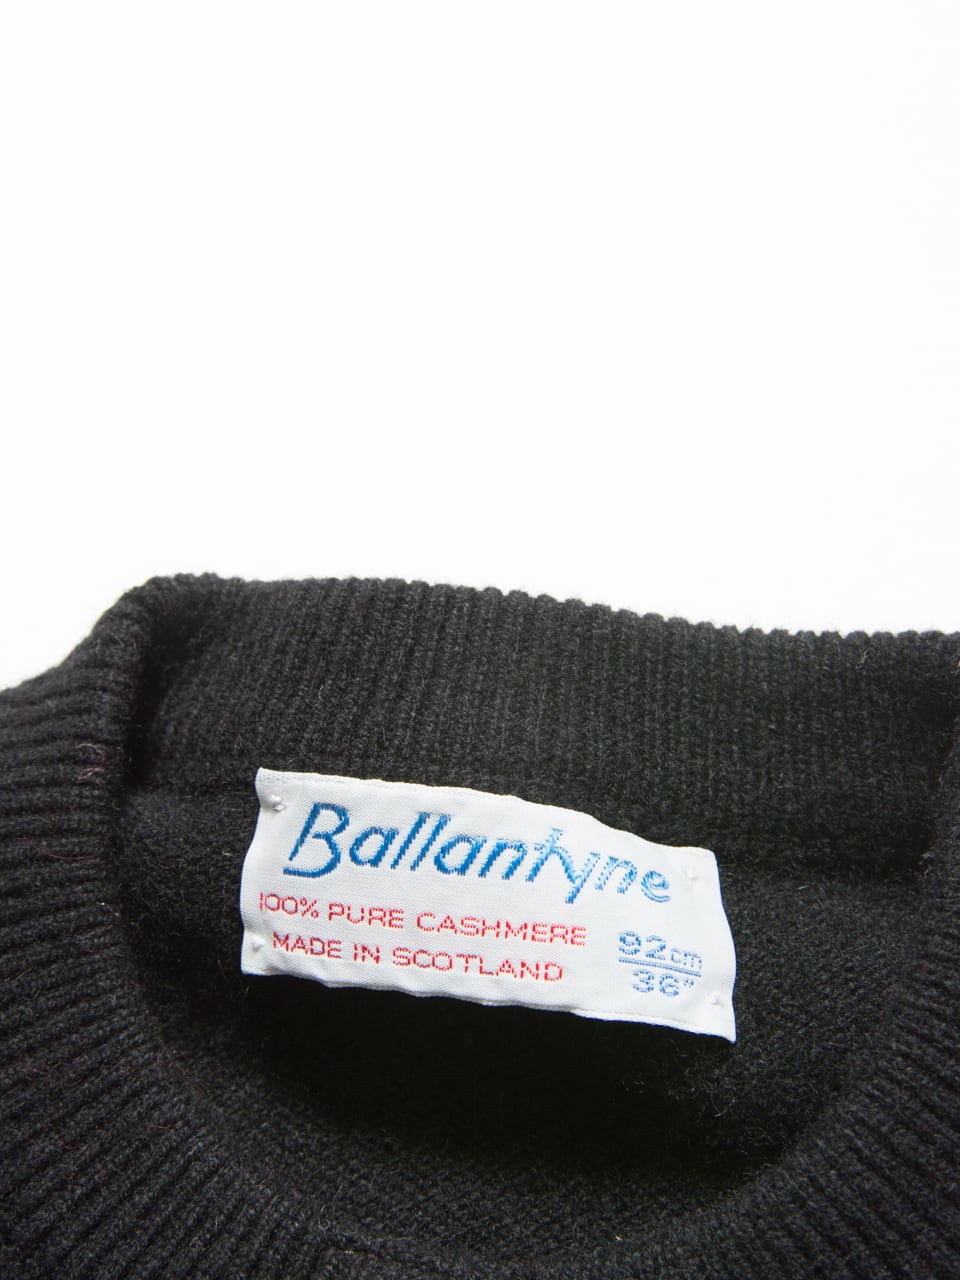 【Ballantyne】Made in Scotland pure cashmere gold button knit cardigan（バランタイン  スコットランド製 ピュアカシミヤ100%金ボタンニットカーディガン）1c | MASCOT/E powered by BASE